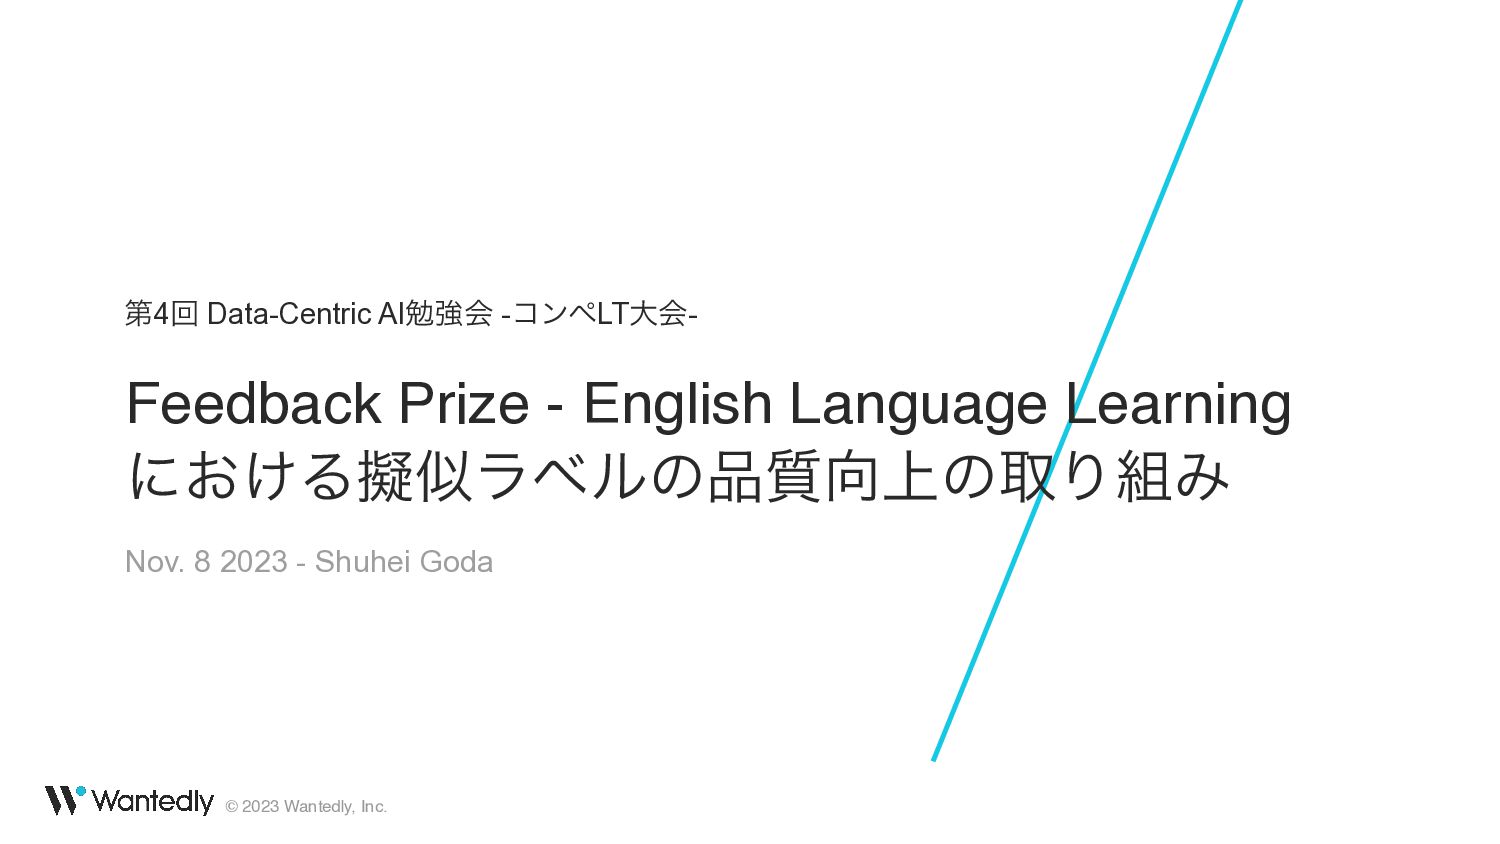 Feedback Prize - English Language Learning  における擬似ラベルの品質向上の取り組み